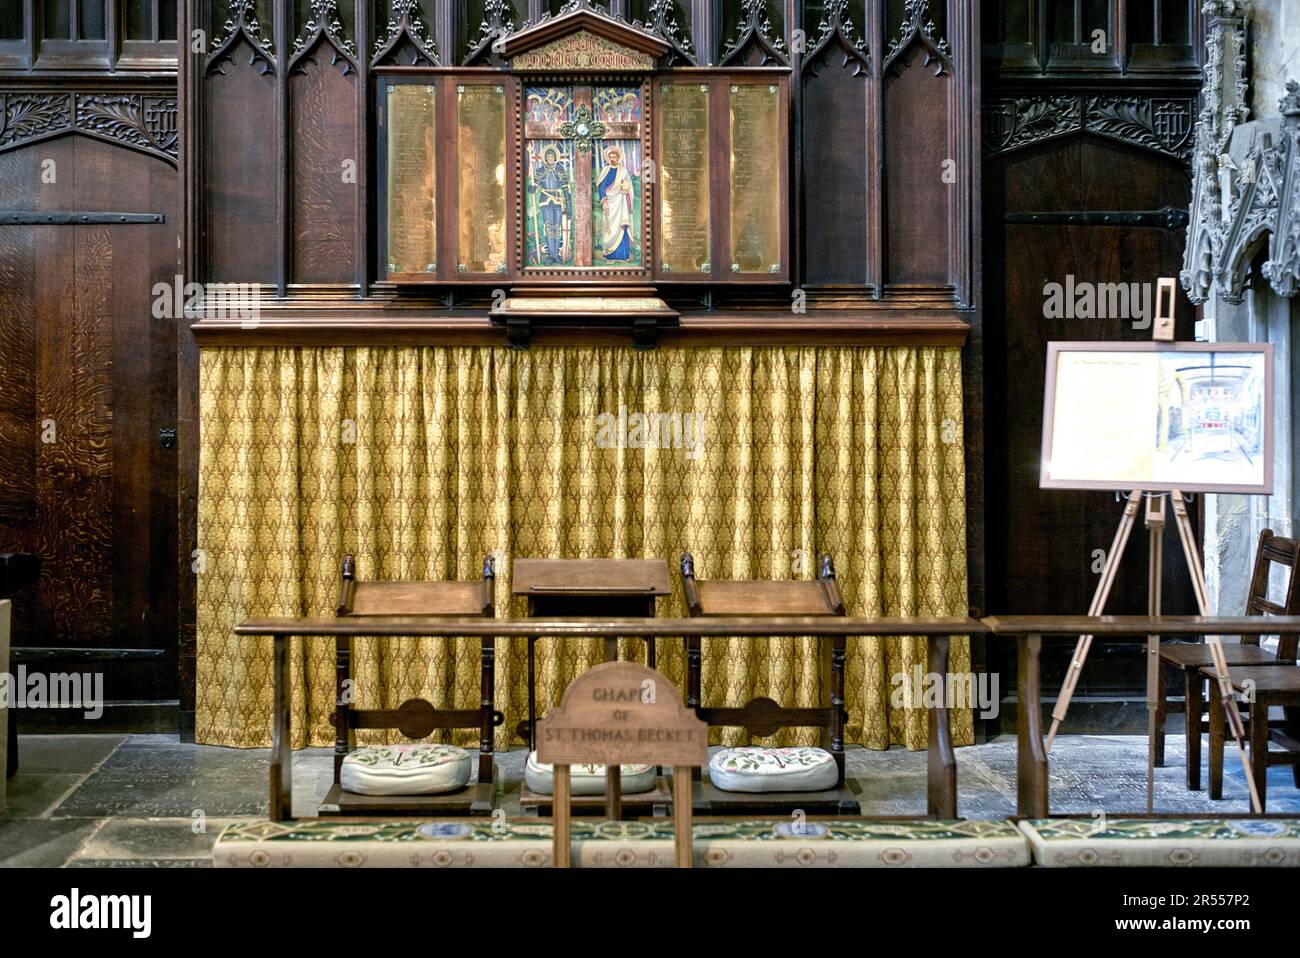 St. Thomas Beckett chapel in Holy trinity church, Stratford upon Avon, England UK Stock Photo